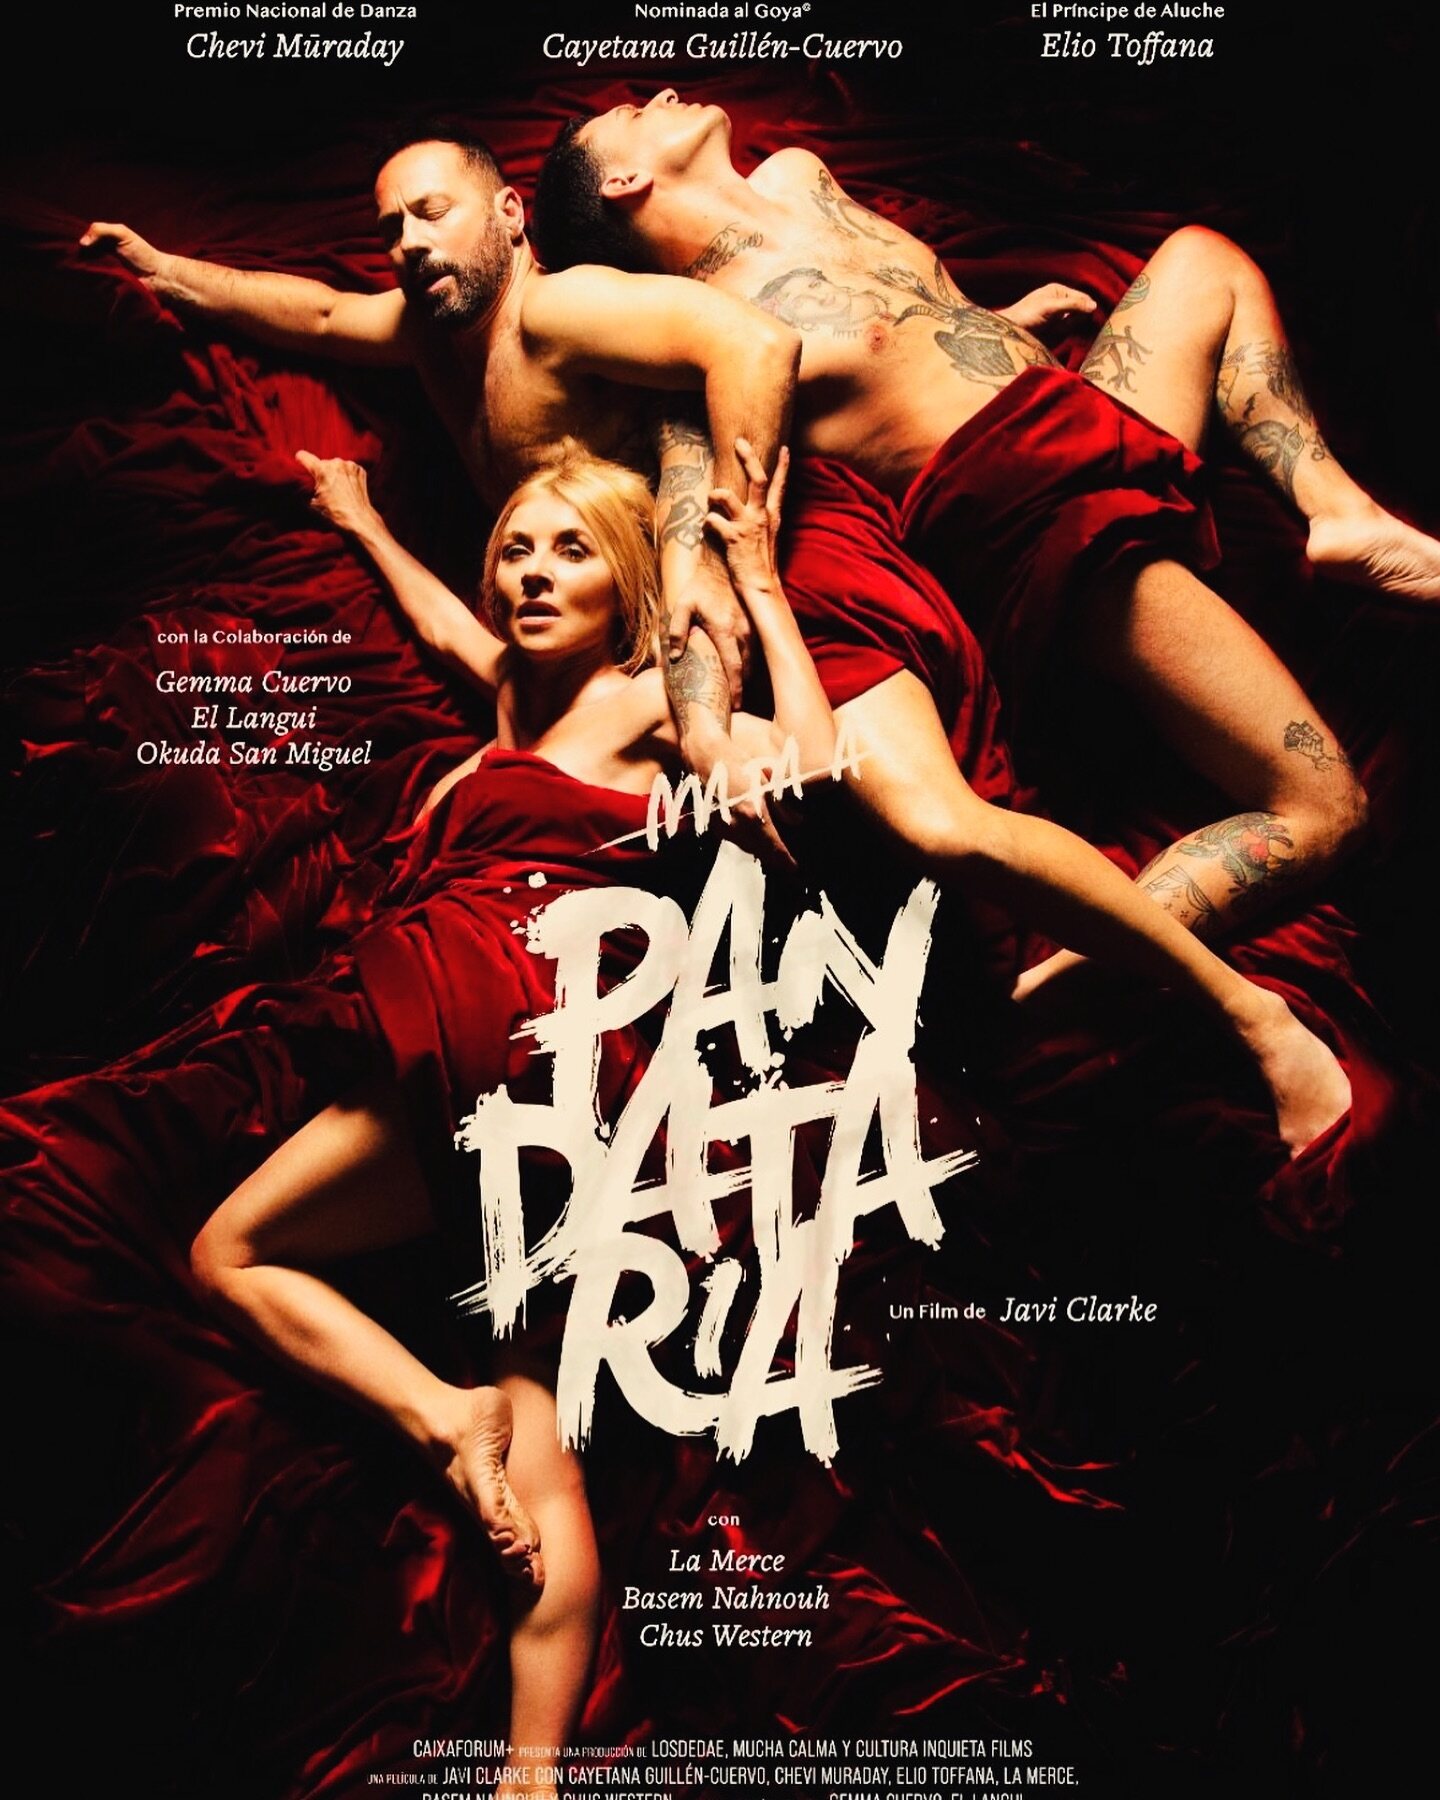 'Pandataria' llega a los Teatros del Canal de Madrid el 14 de febrero